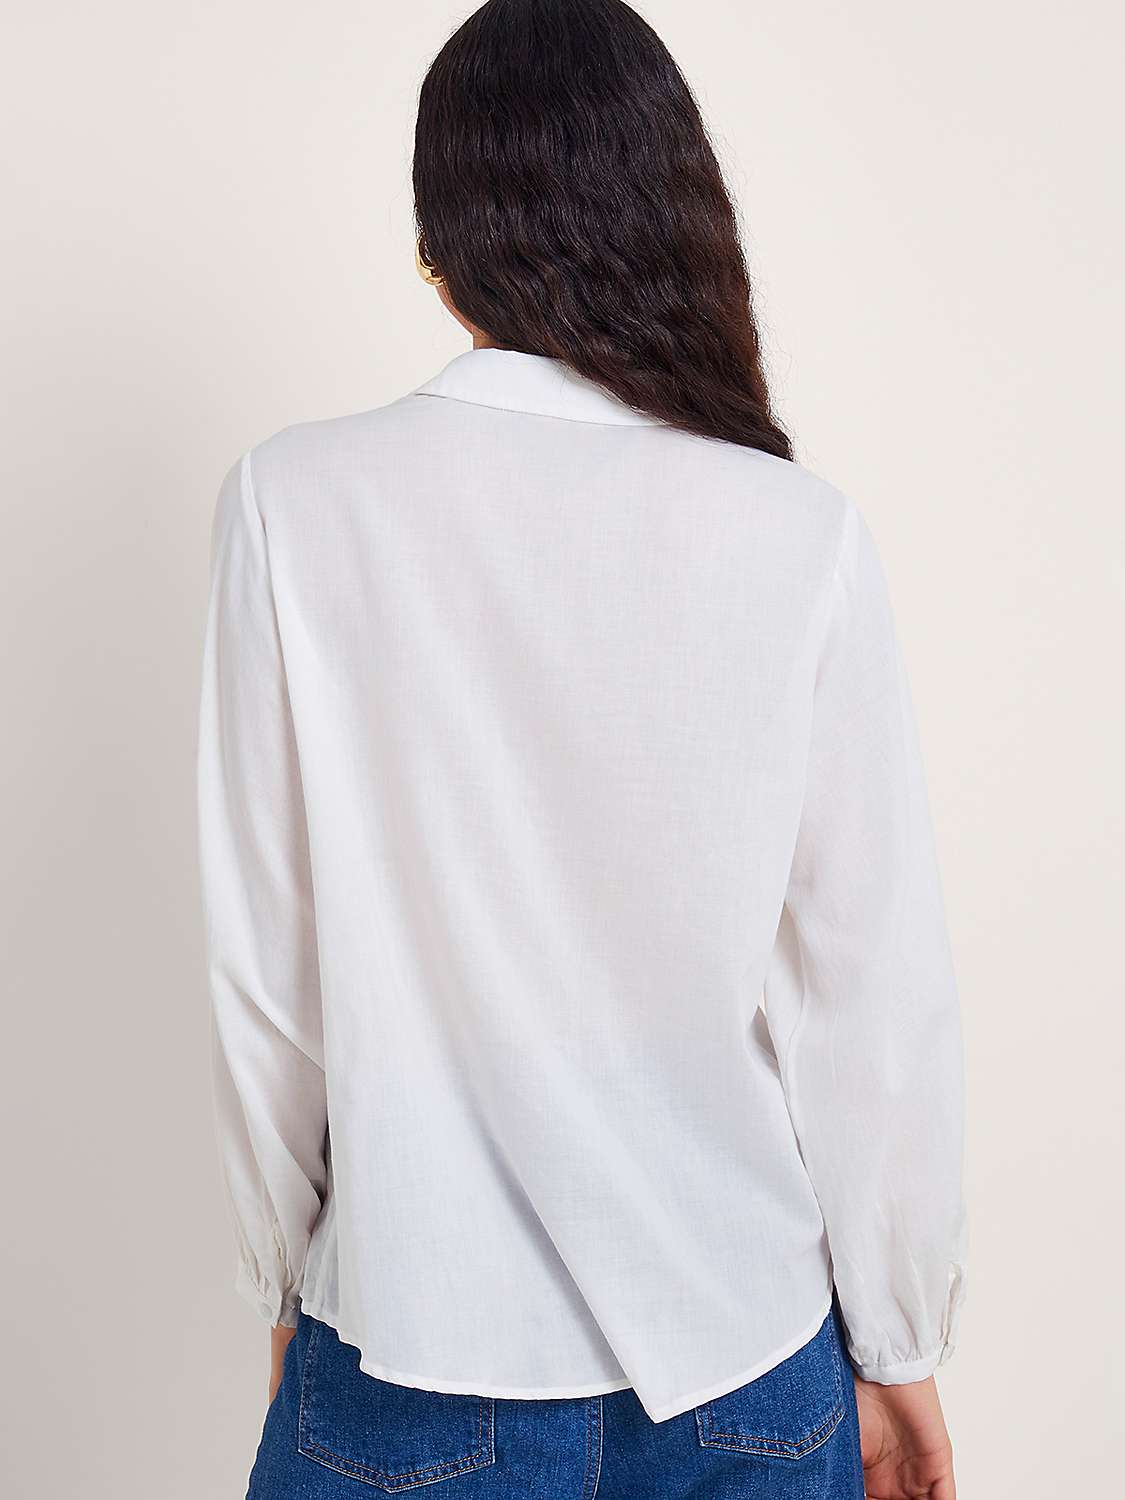 Buy Monsoon Flora Cutwork Shirt, White Online at johnlewis.com